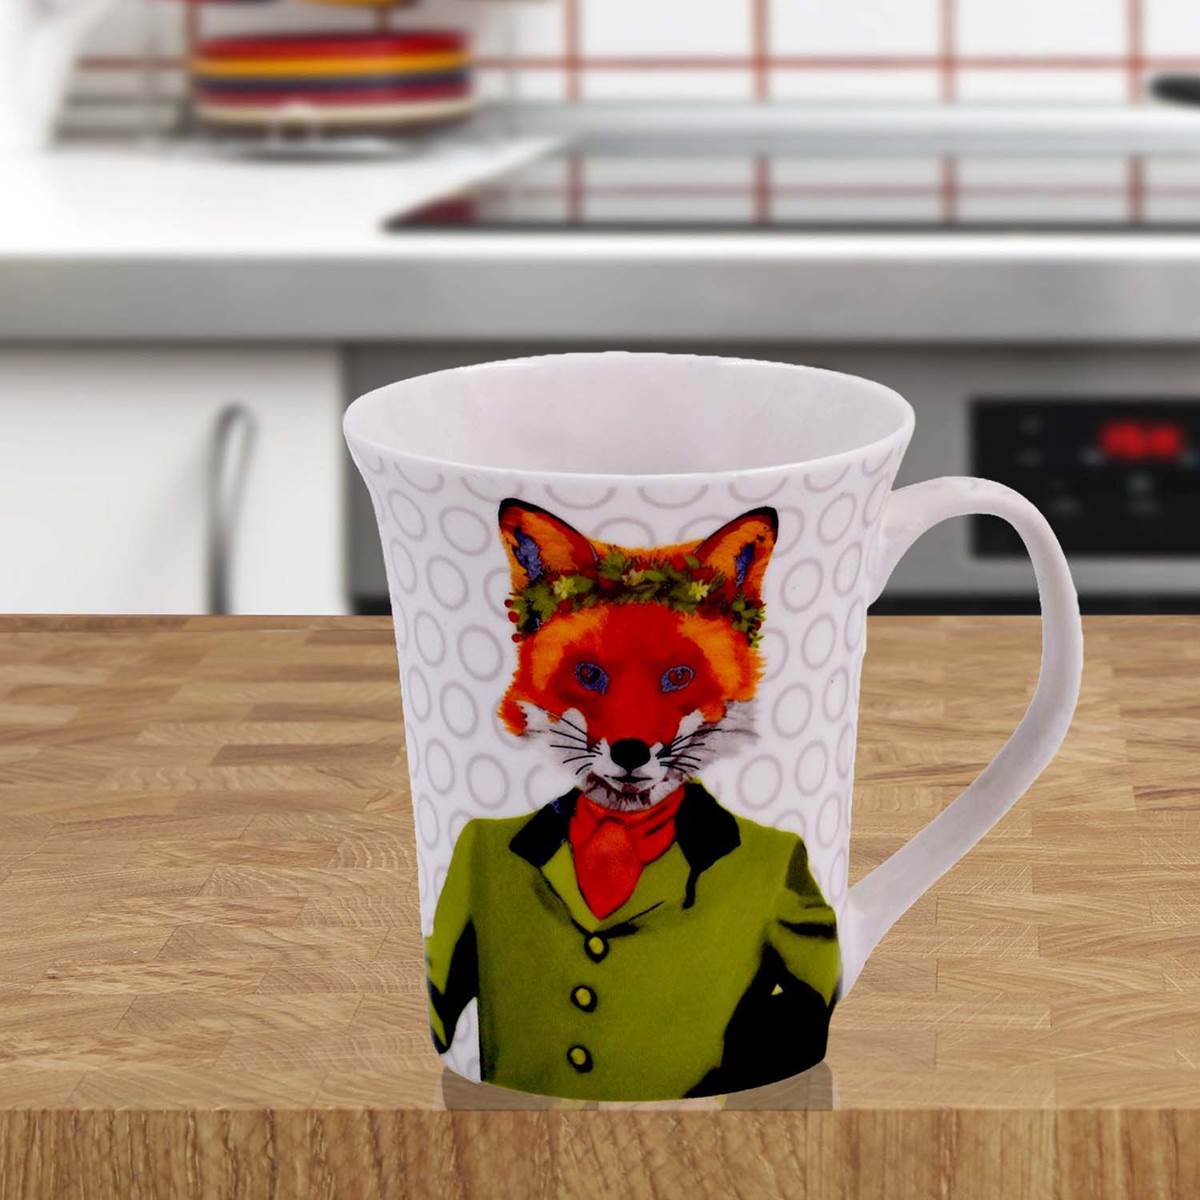 Printed Ceramic Tall Coffee or Tea Mug with handle - 325ml (4019C-D)